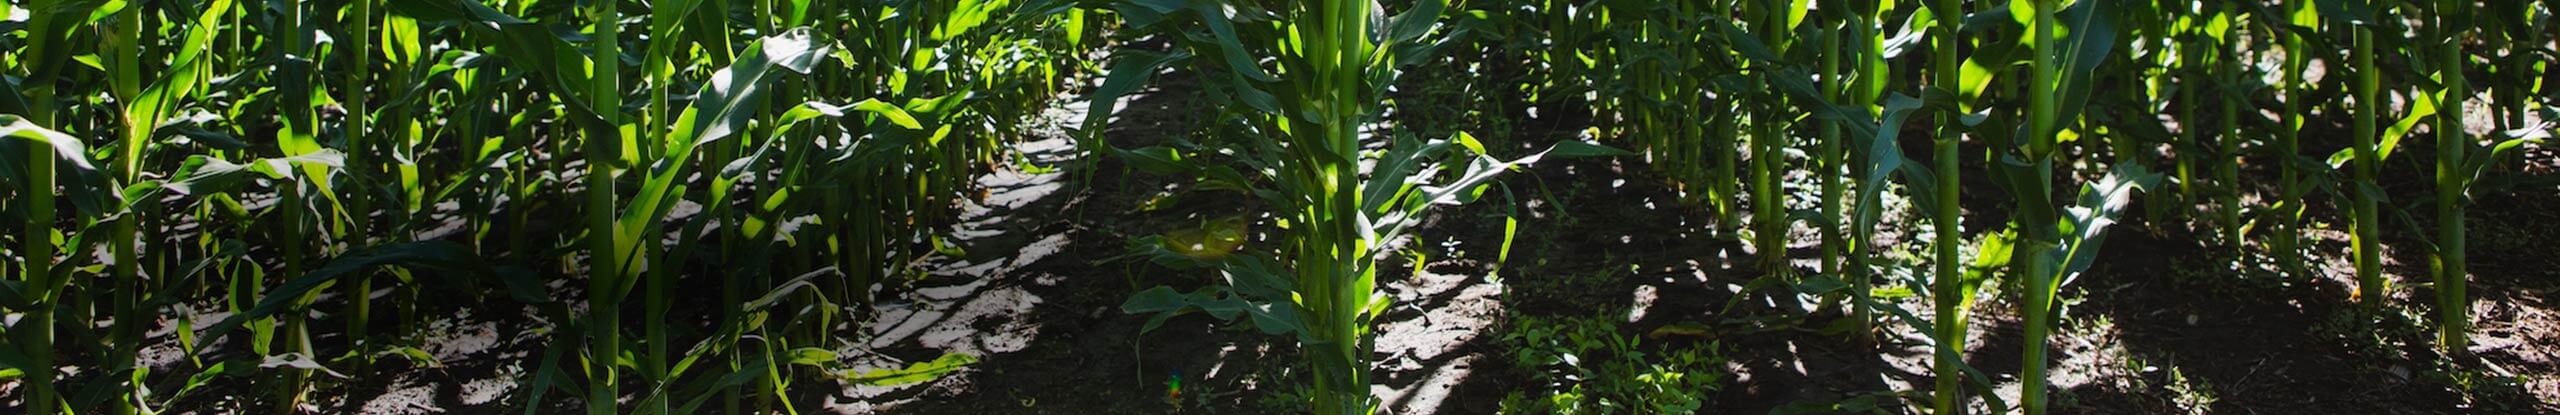 Uniform Emergence in Corn Critical to Yield